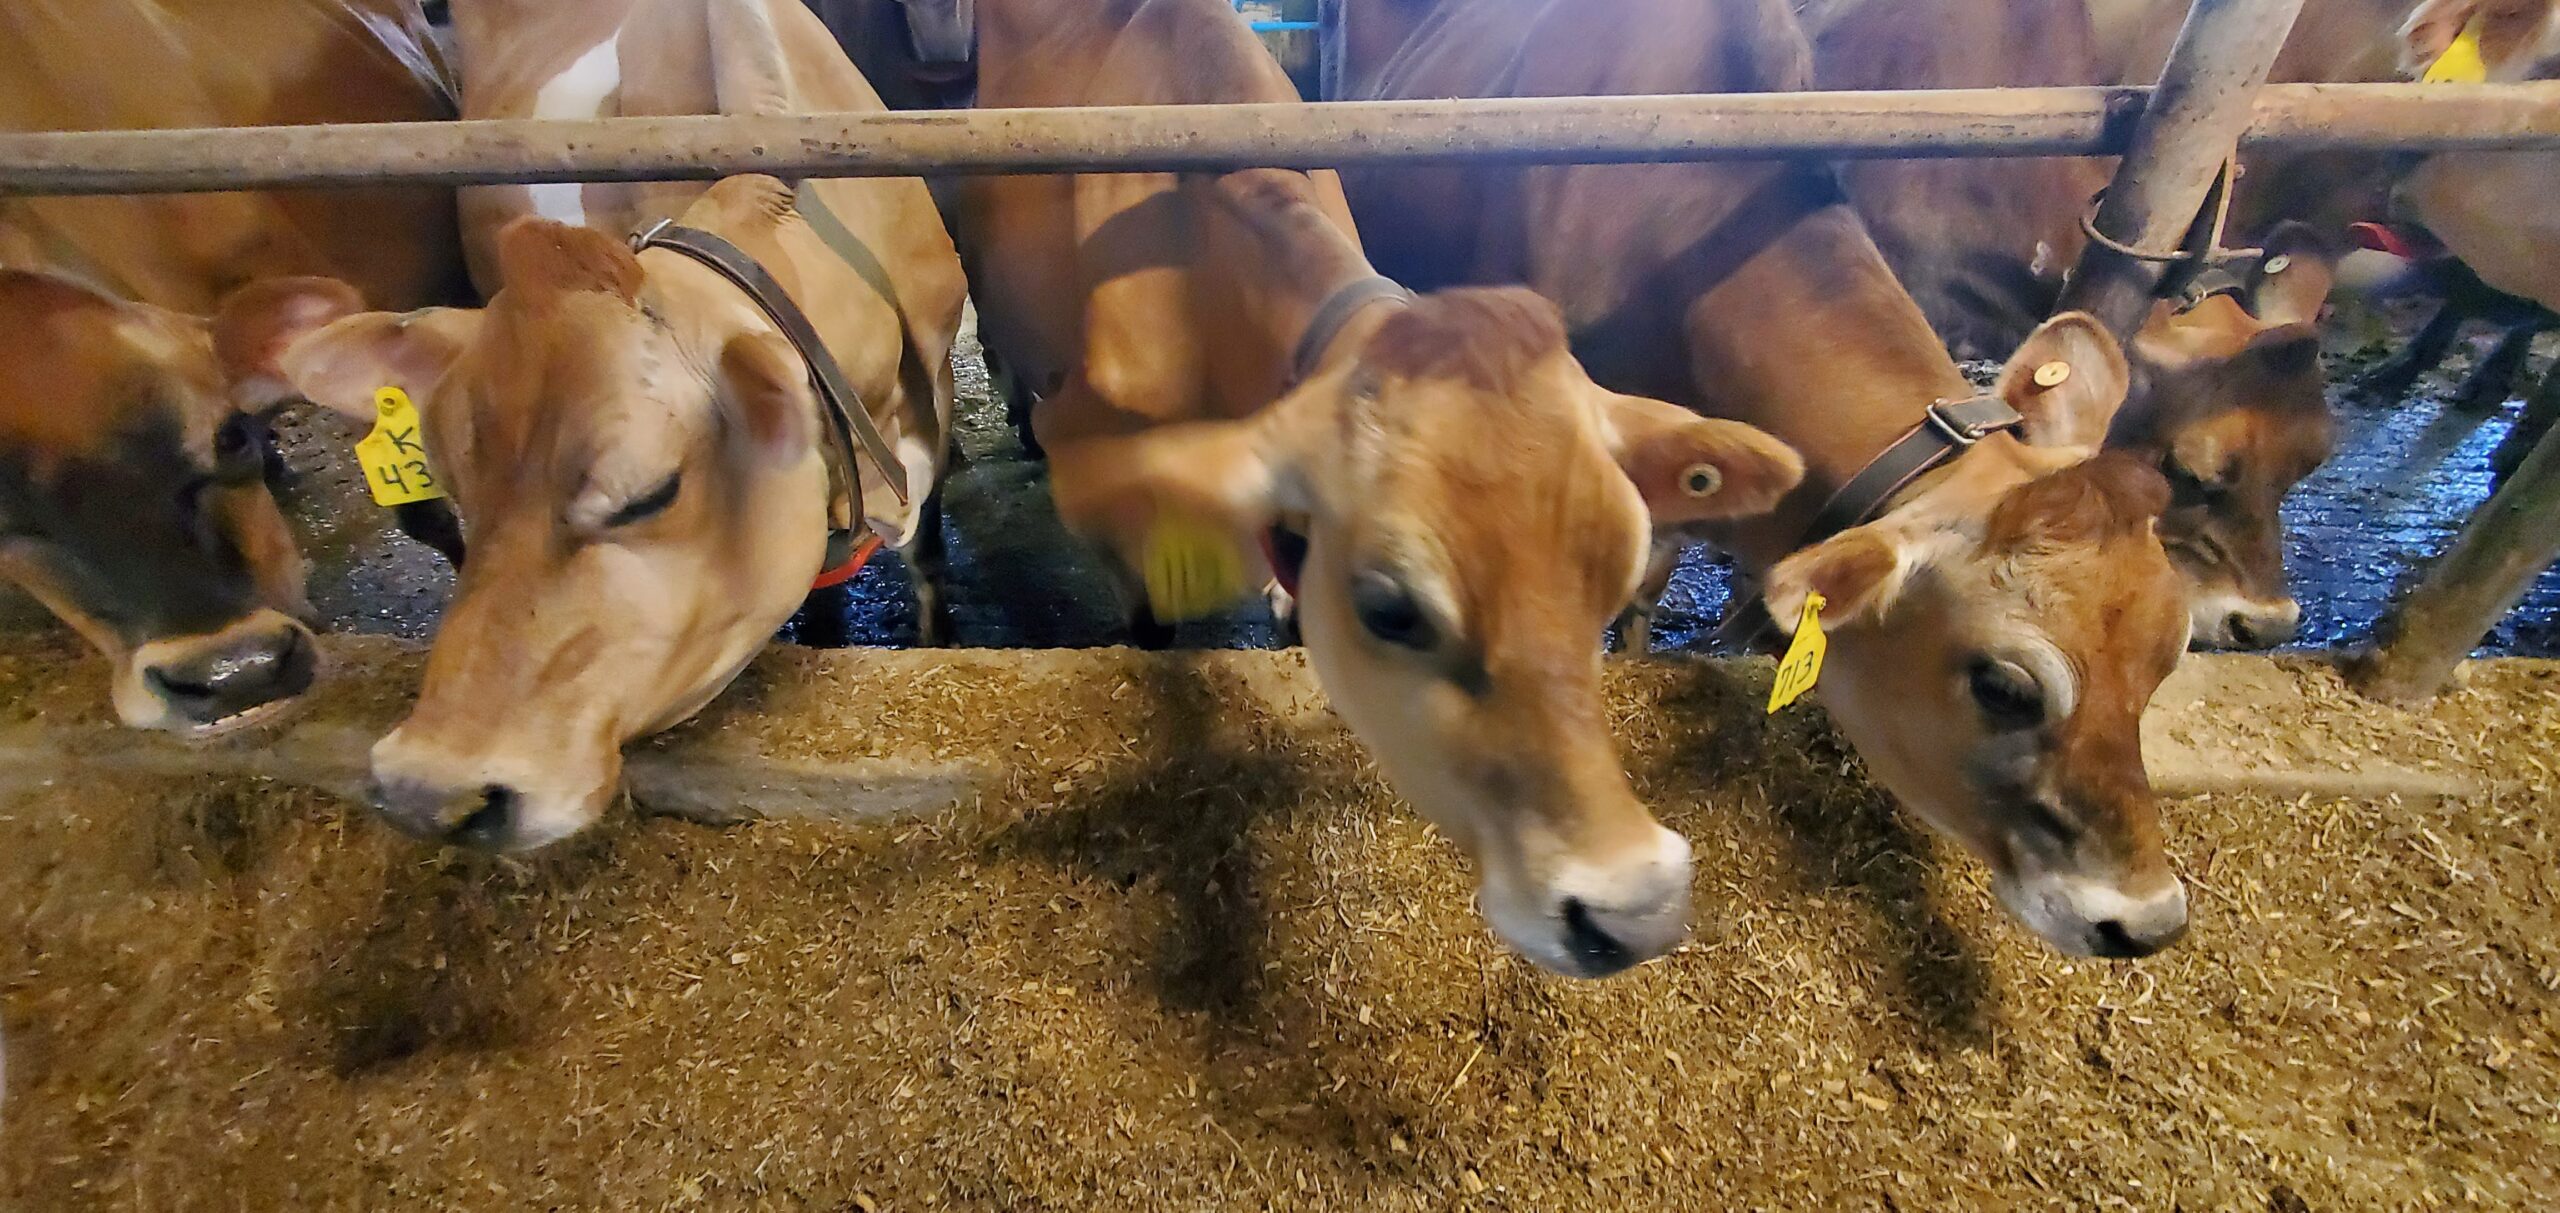 Cows eating grain feed